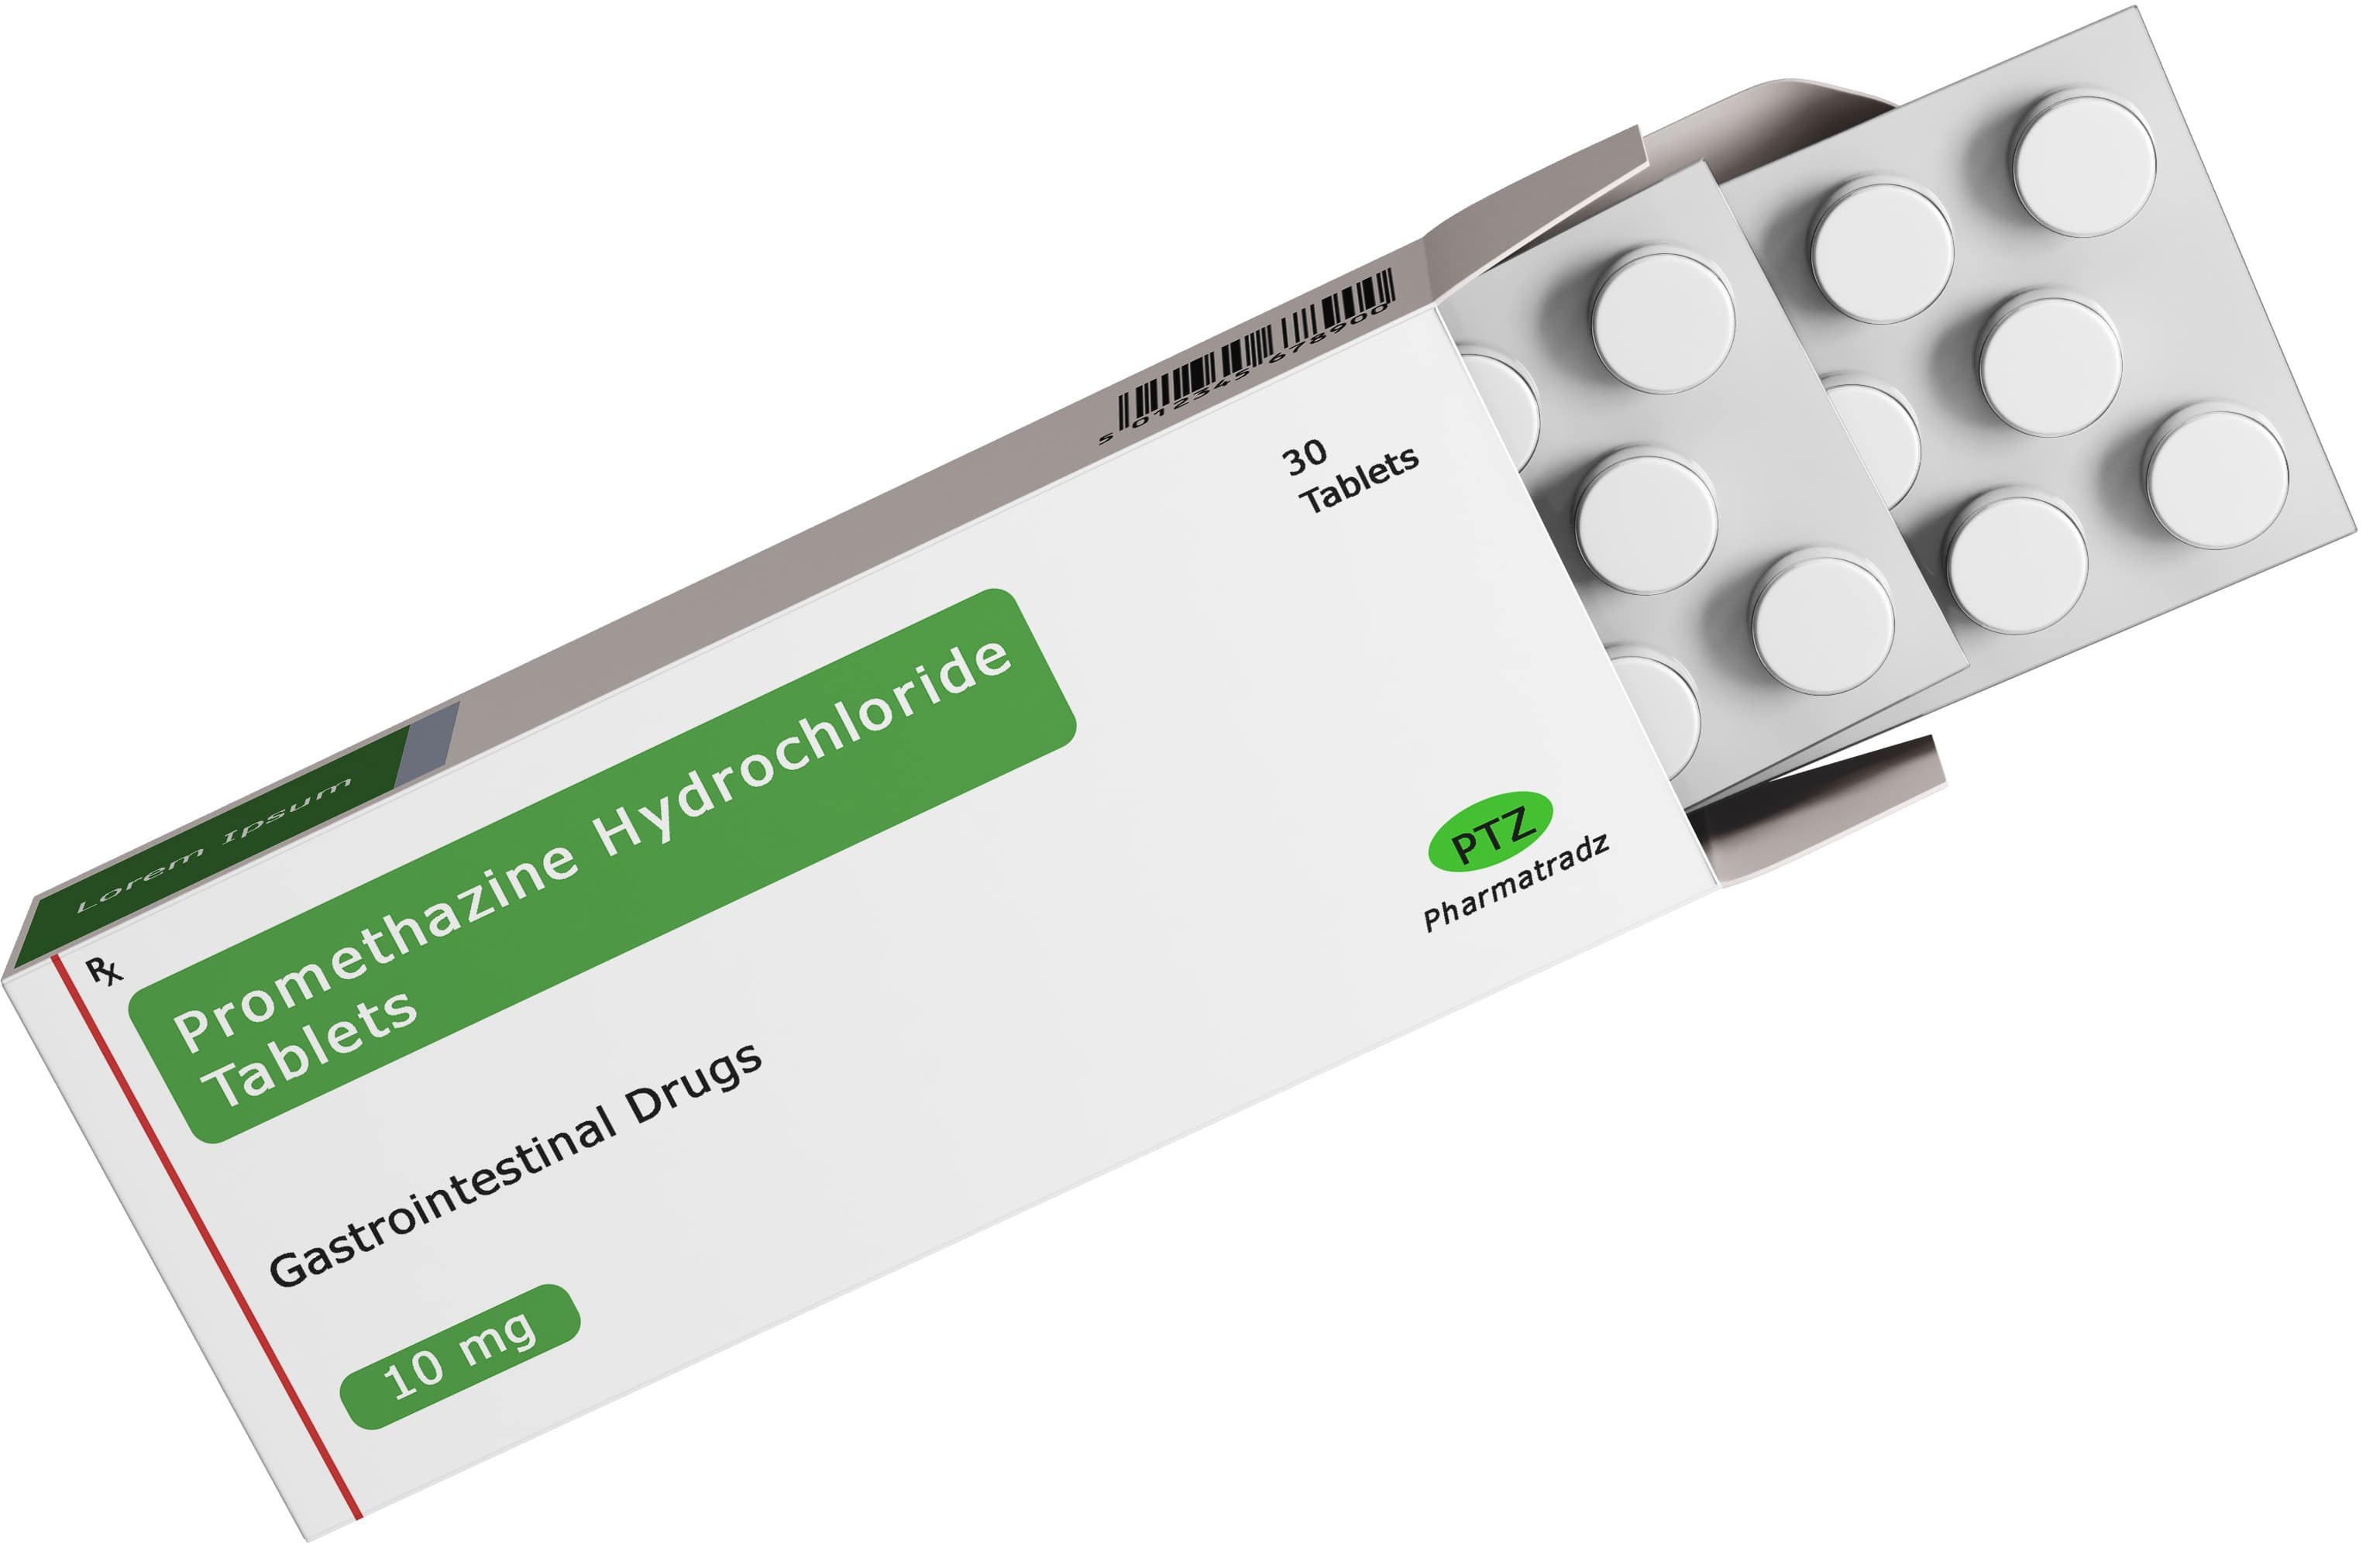 Promethazine hydrochloride Tablets